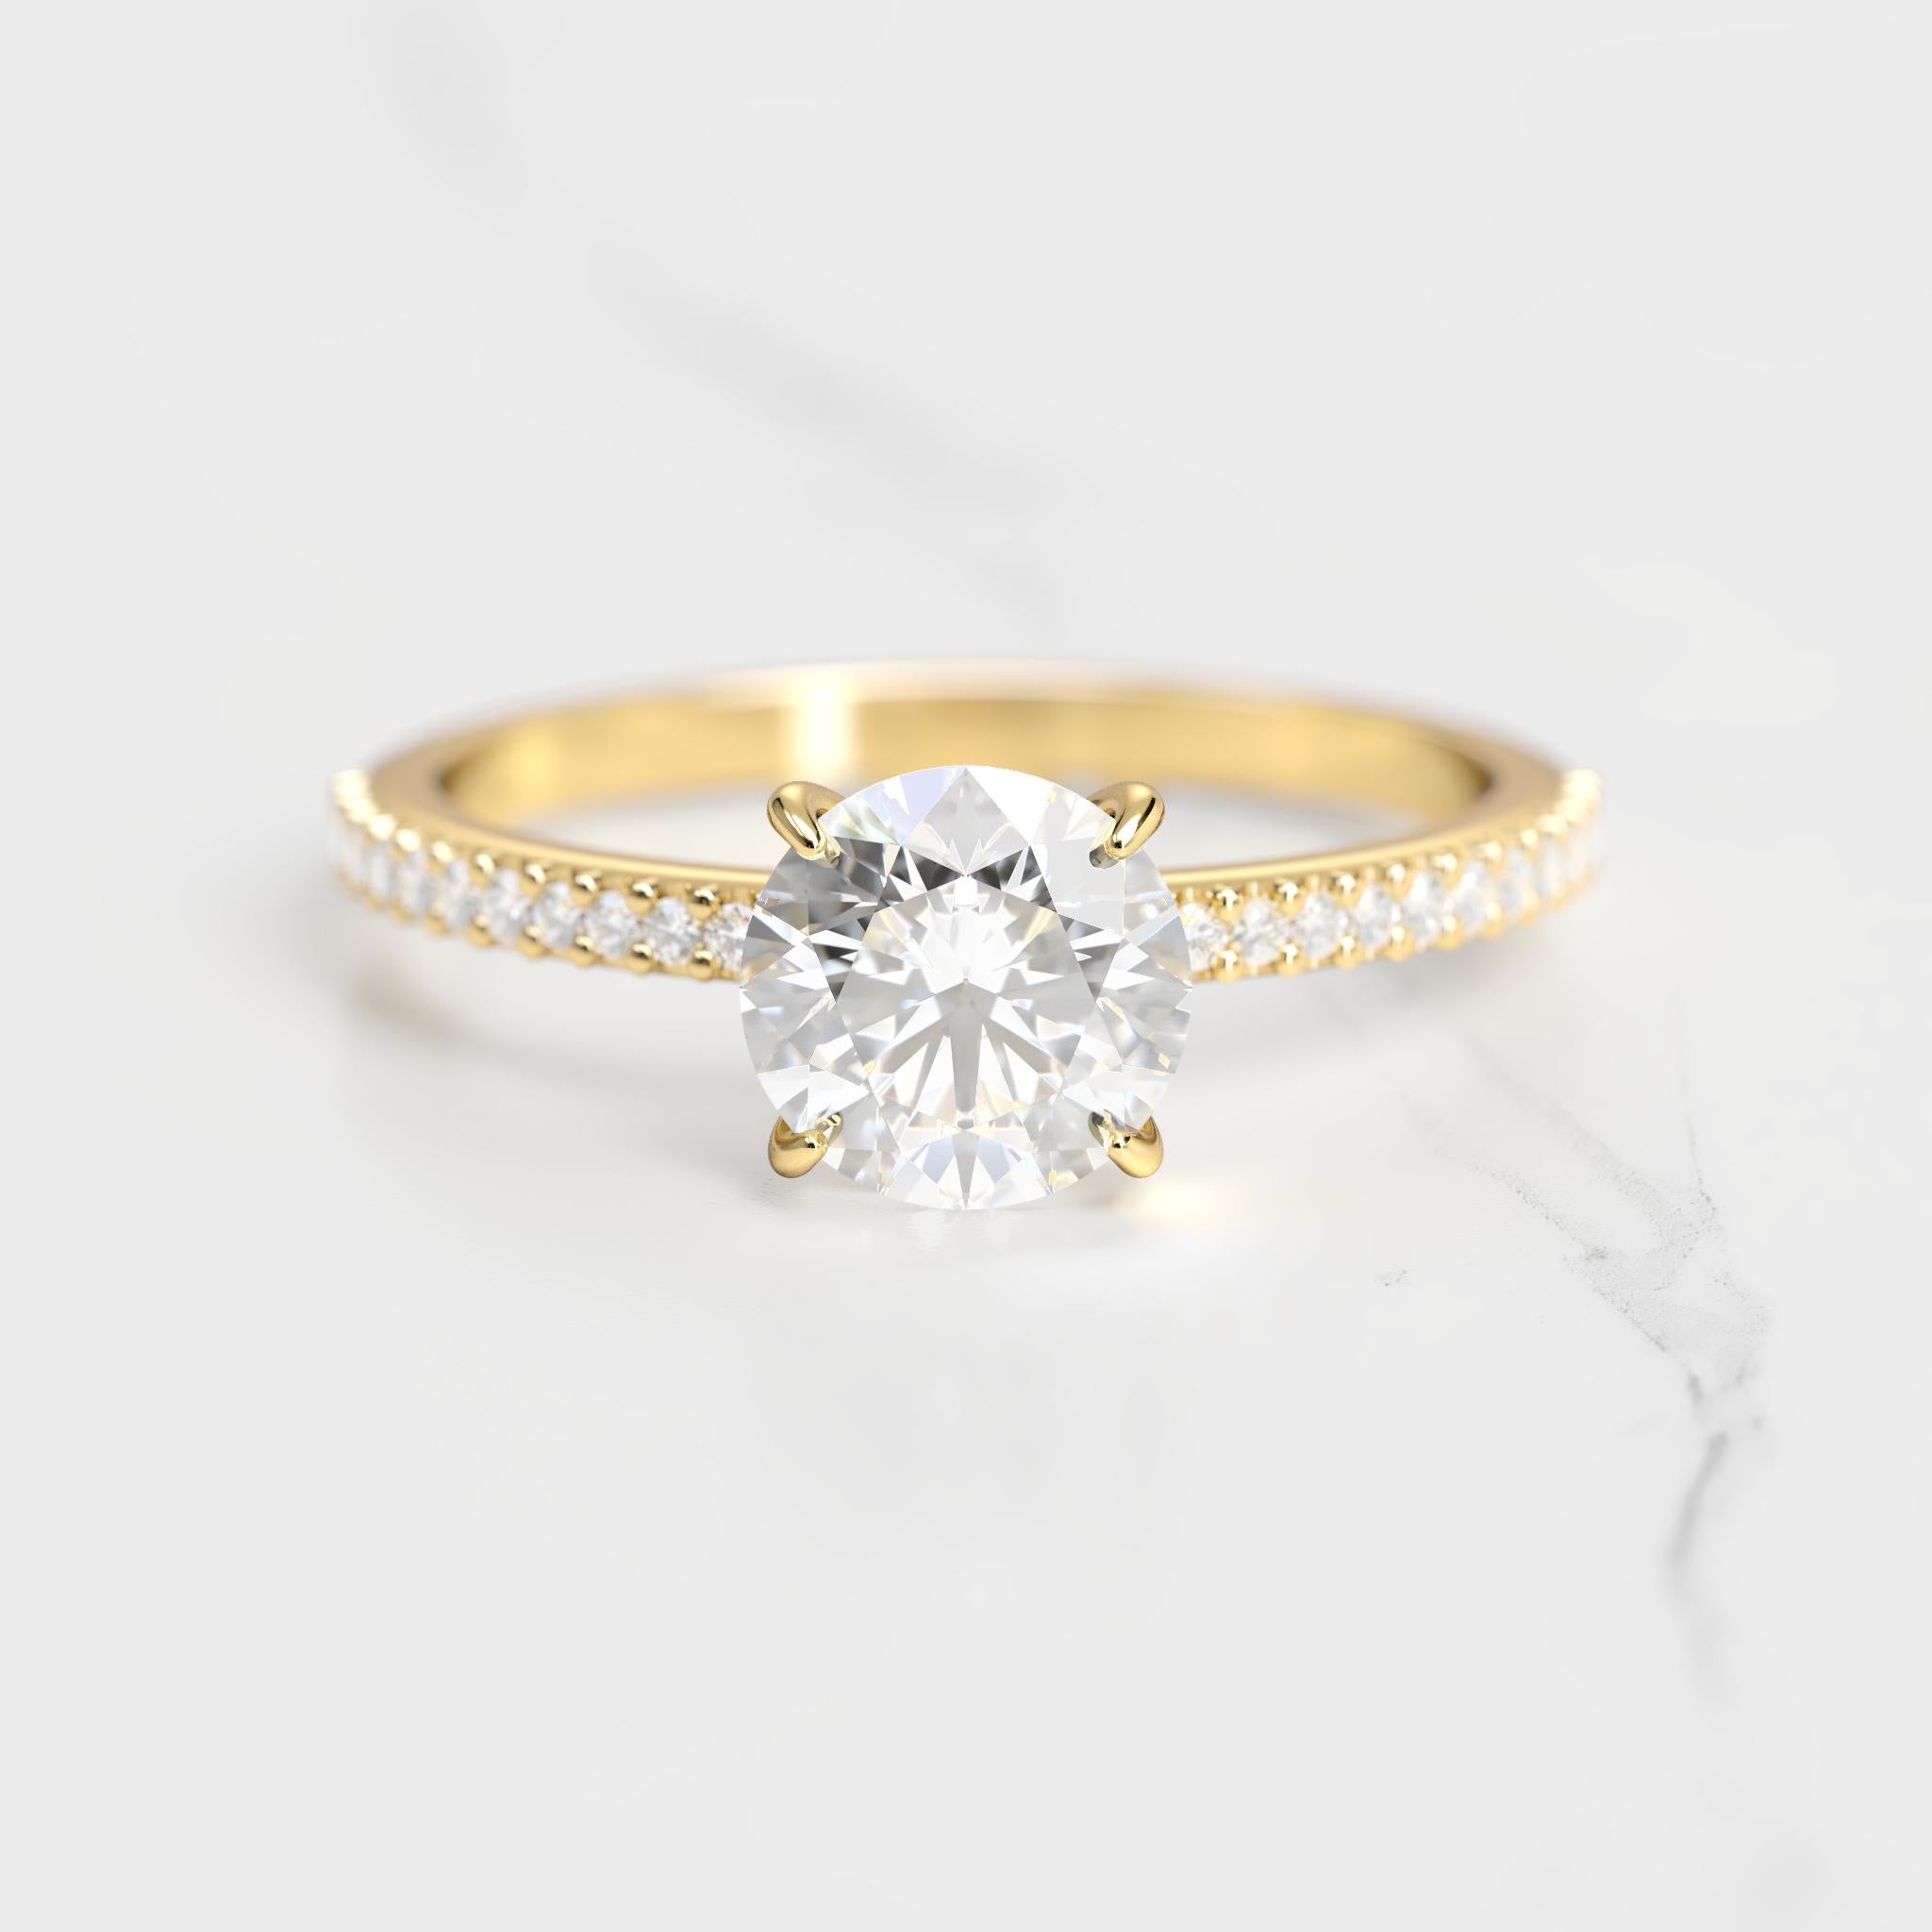 ROUND HALF PAVE DIAMOND RING - 18k yellow gold / 0.75ct / natural diamond